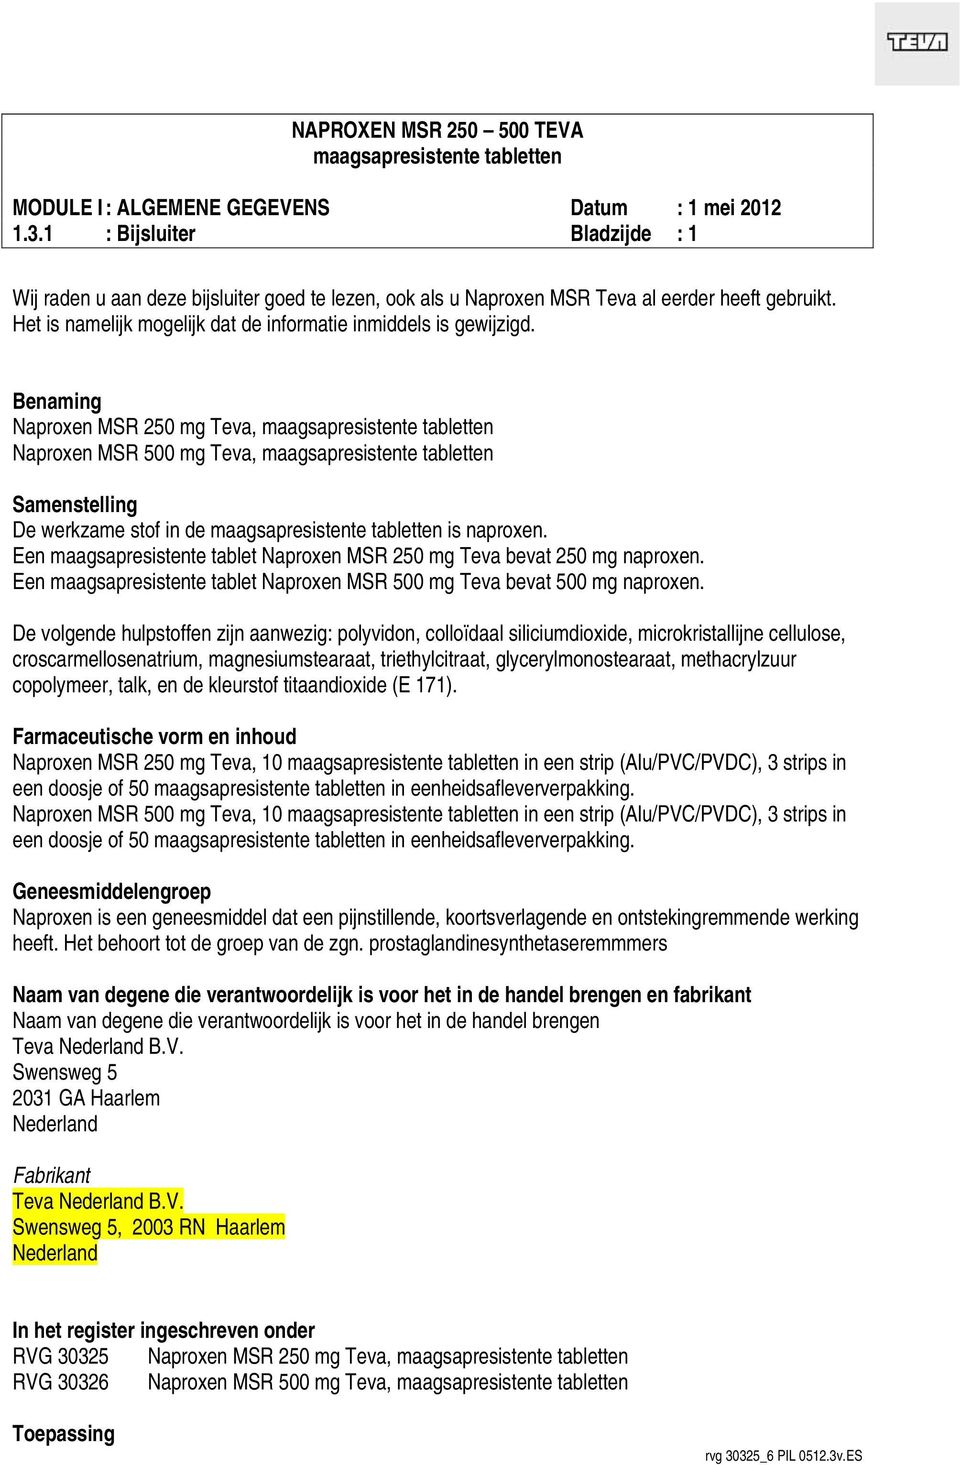 NAPROXEN MSR TEVA maagsapresistente tabletten - PDF Free Download